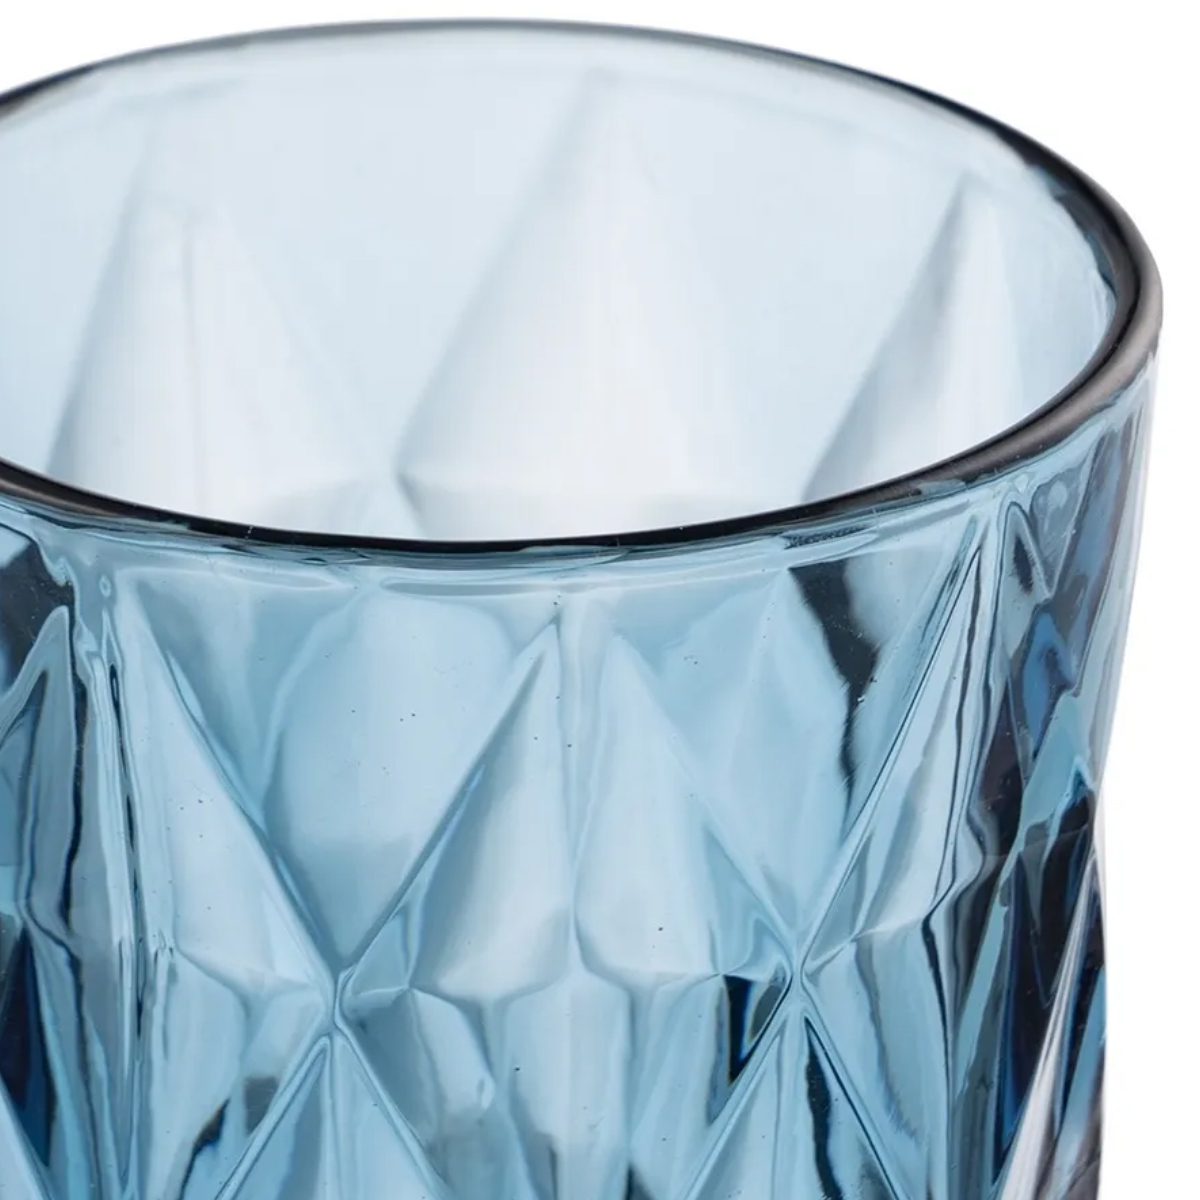 Large blue glass 345ml